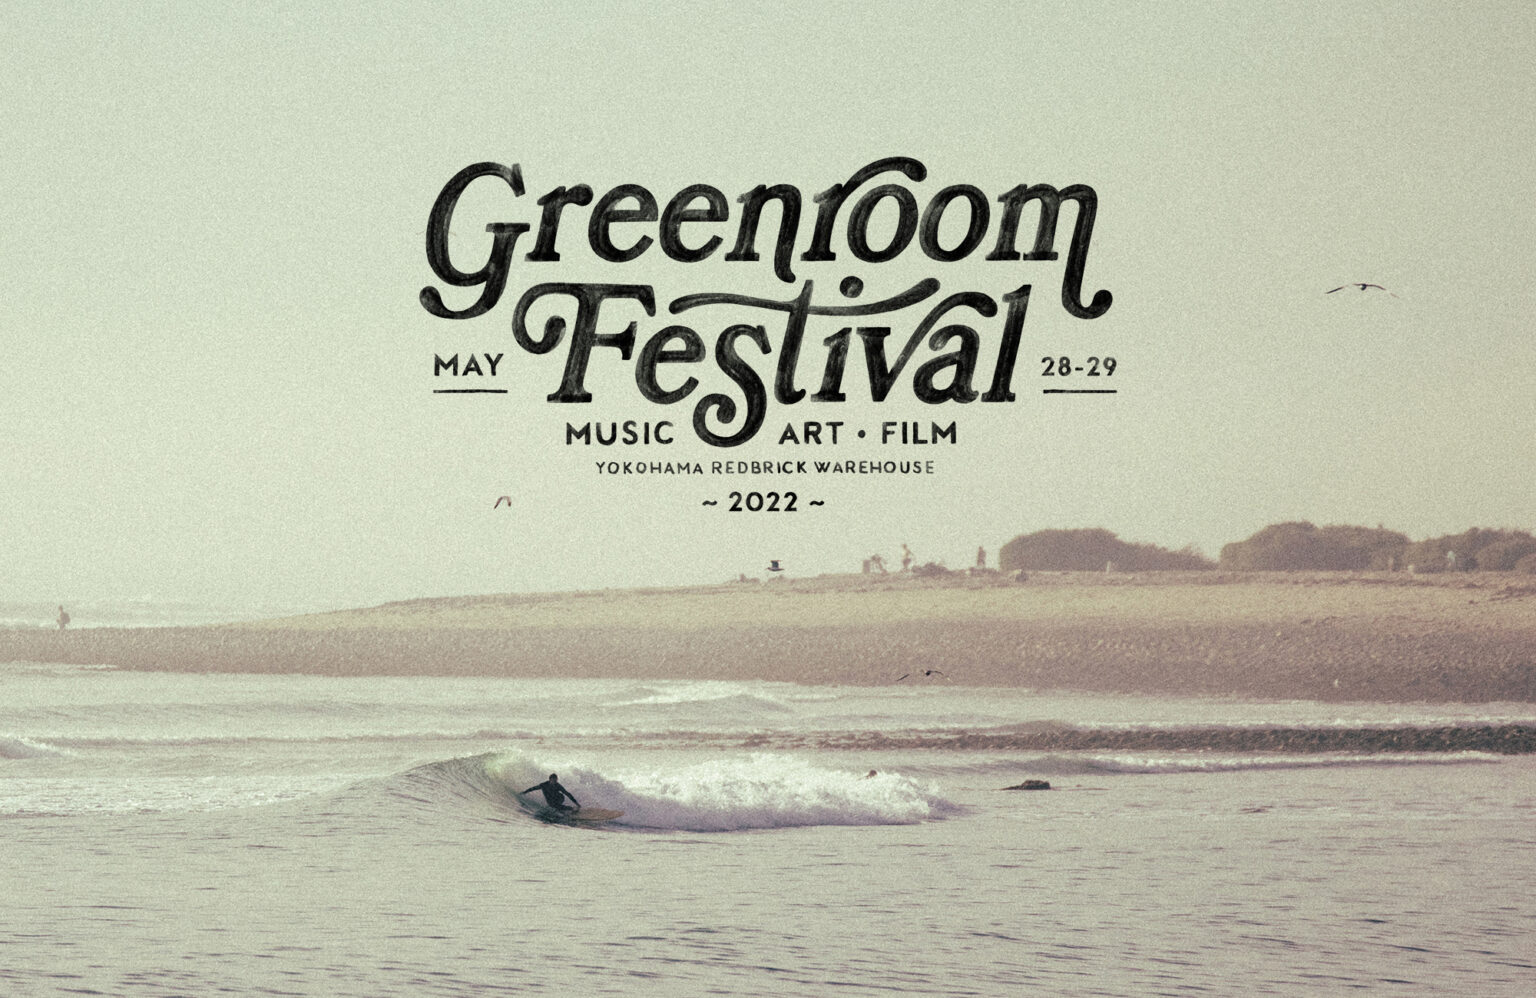 greenroom fes 2022 5/28（土）1day